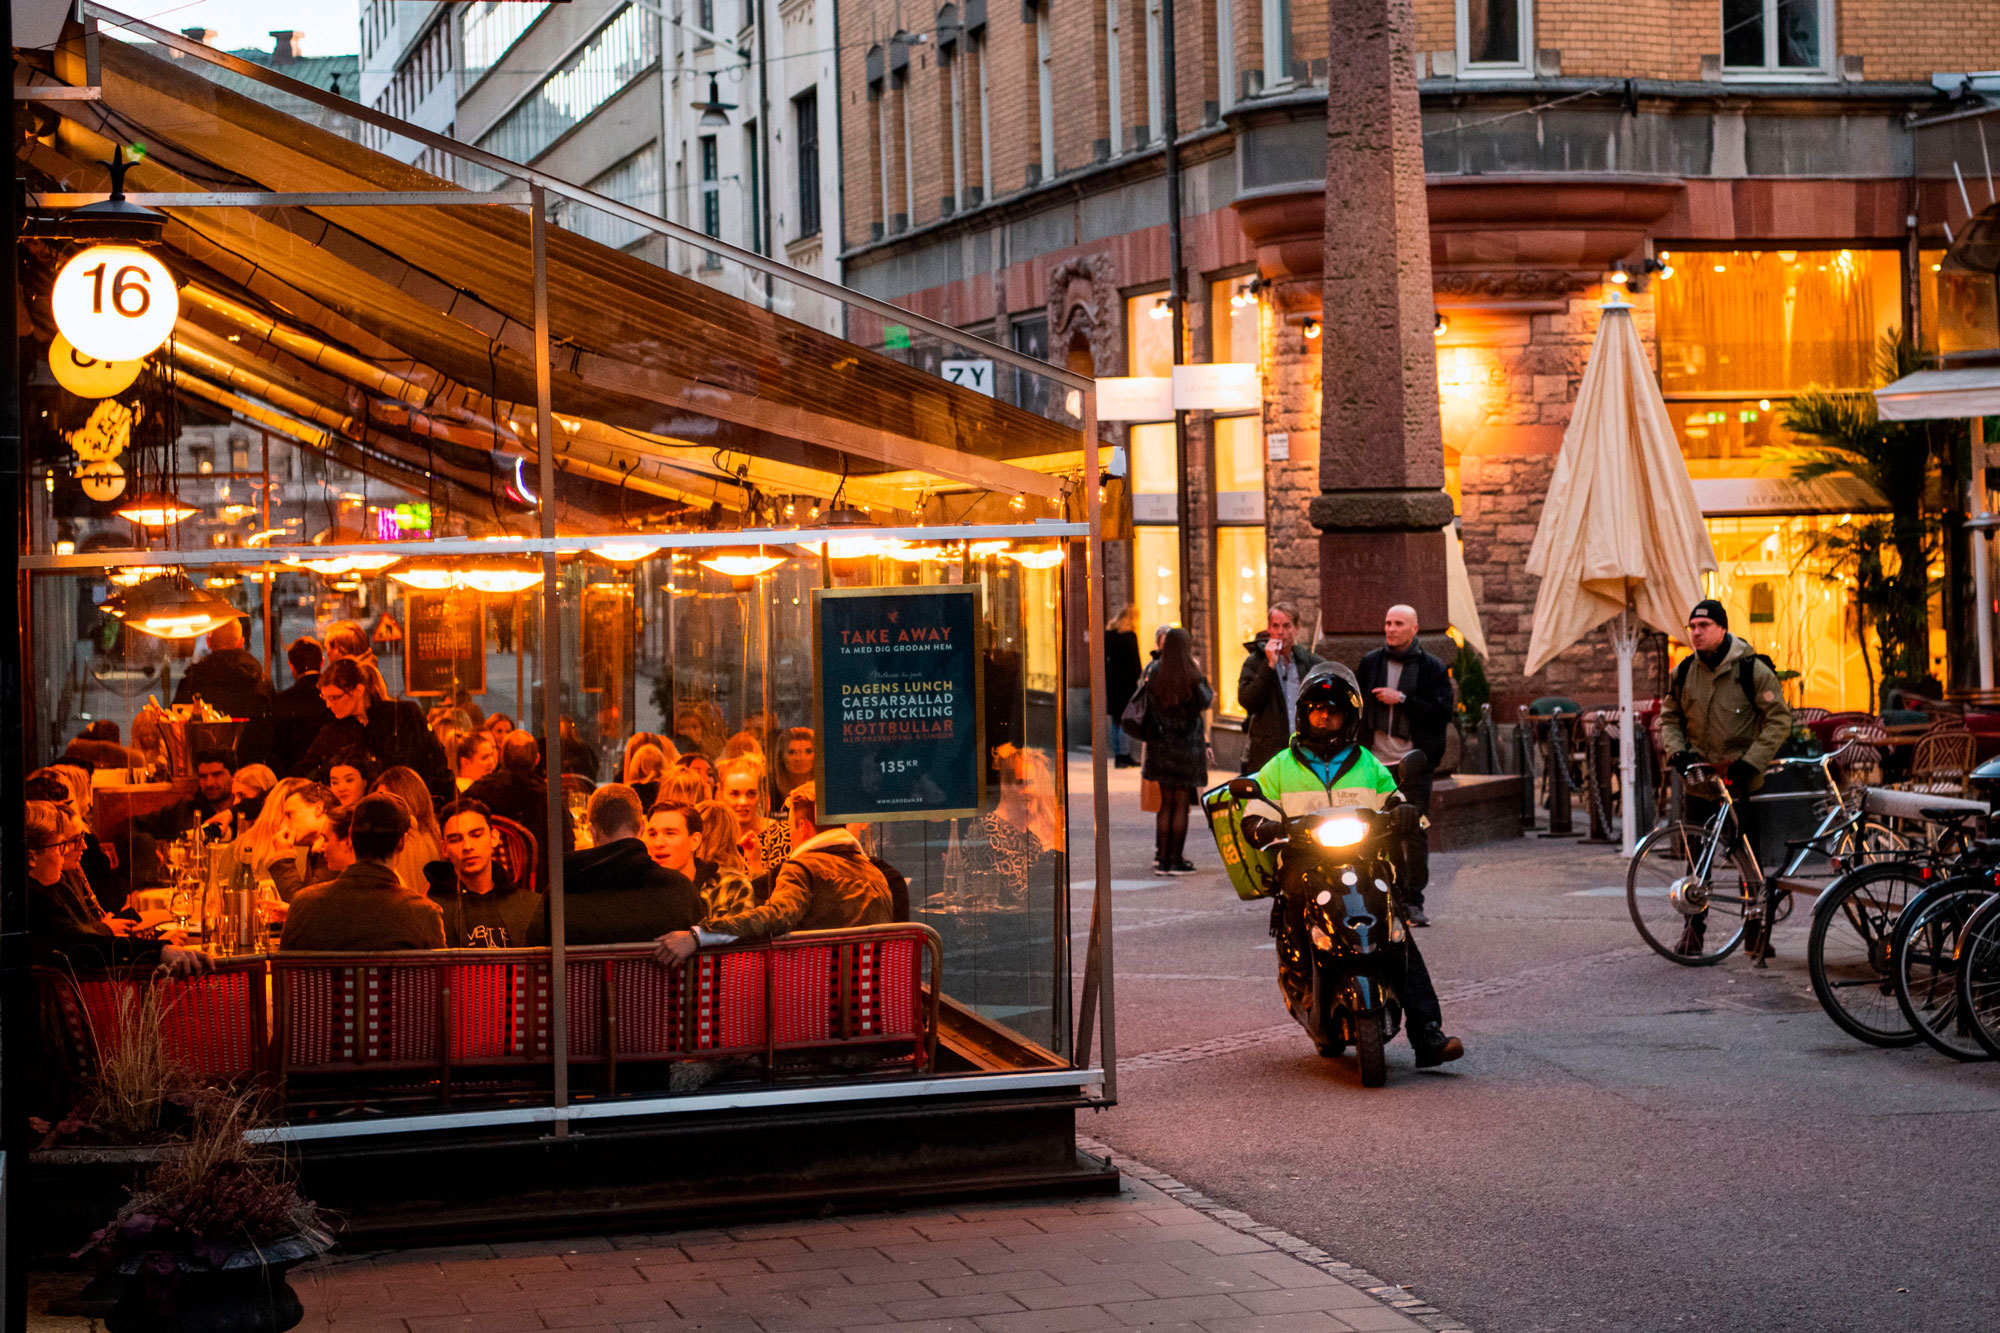 People dine in a restaurant on March 27 in Stockholm, Sweden.